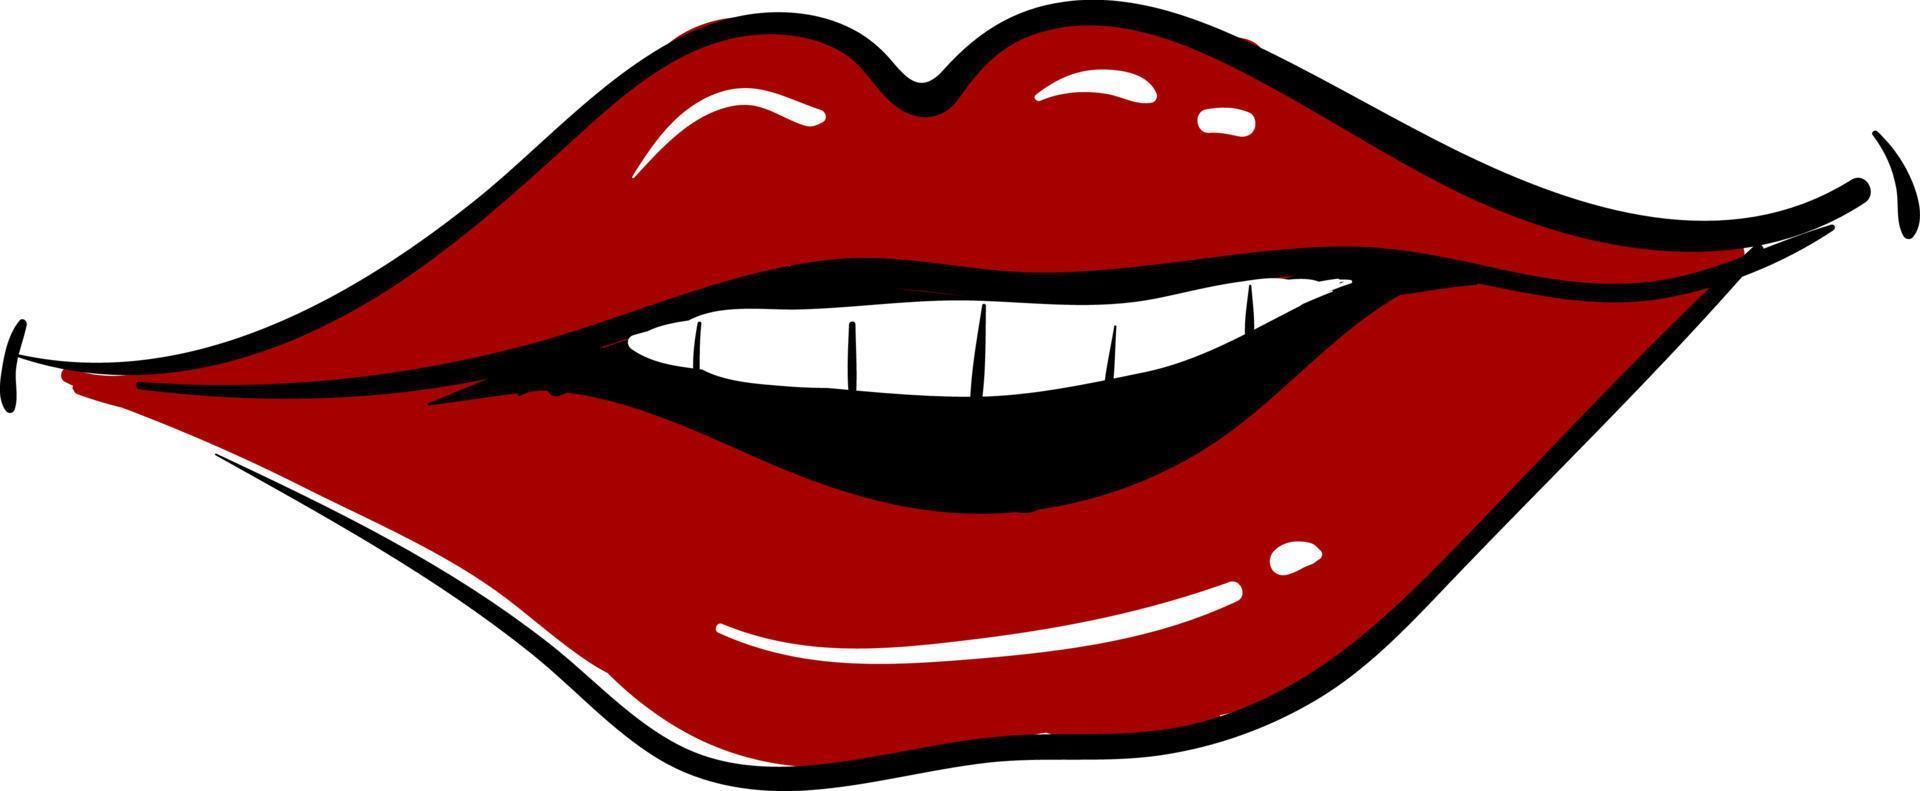 Red lips smiling, illustration, vector on white background.